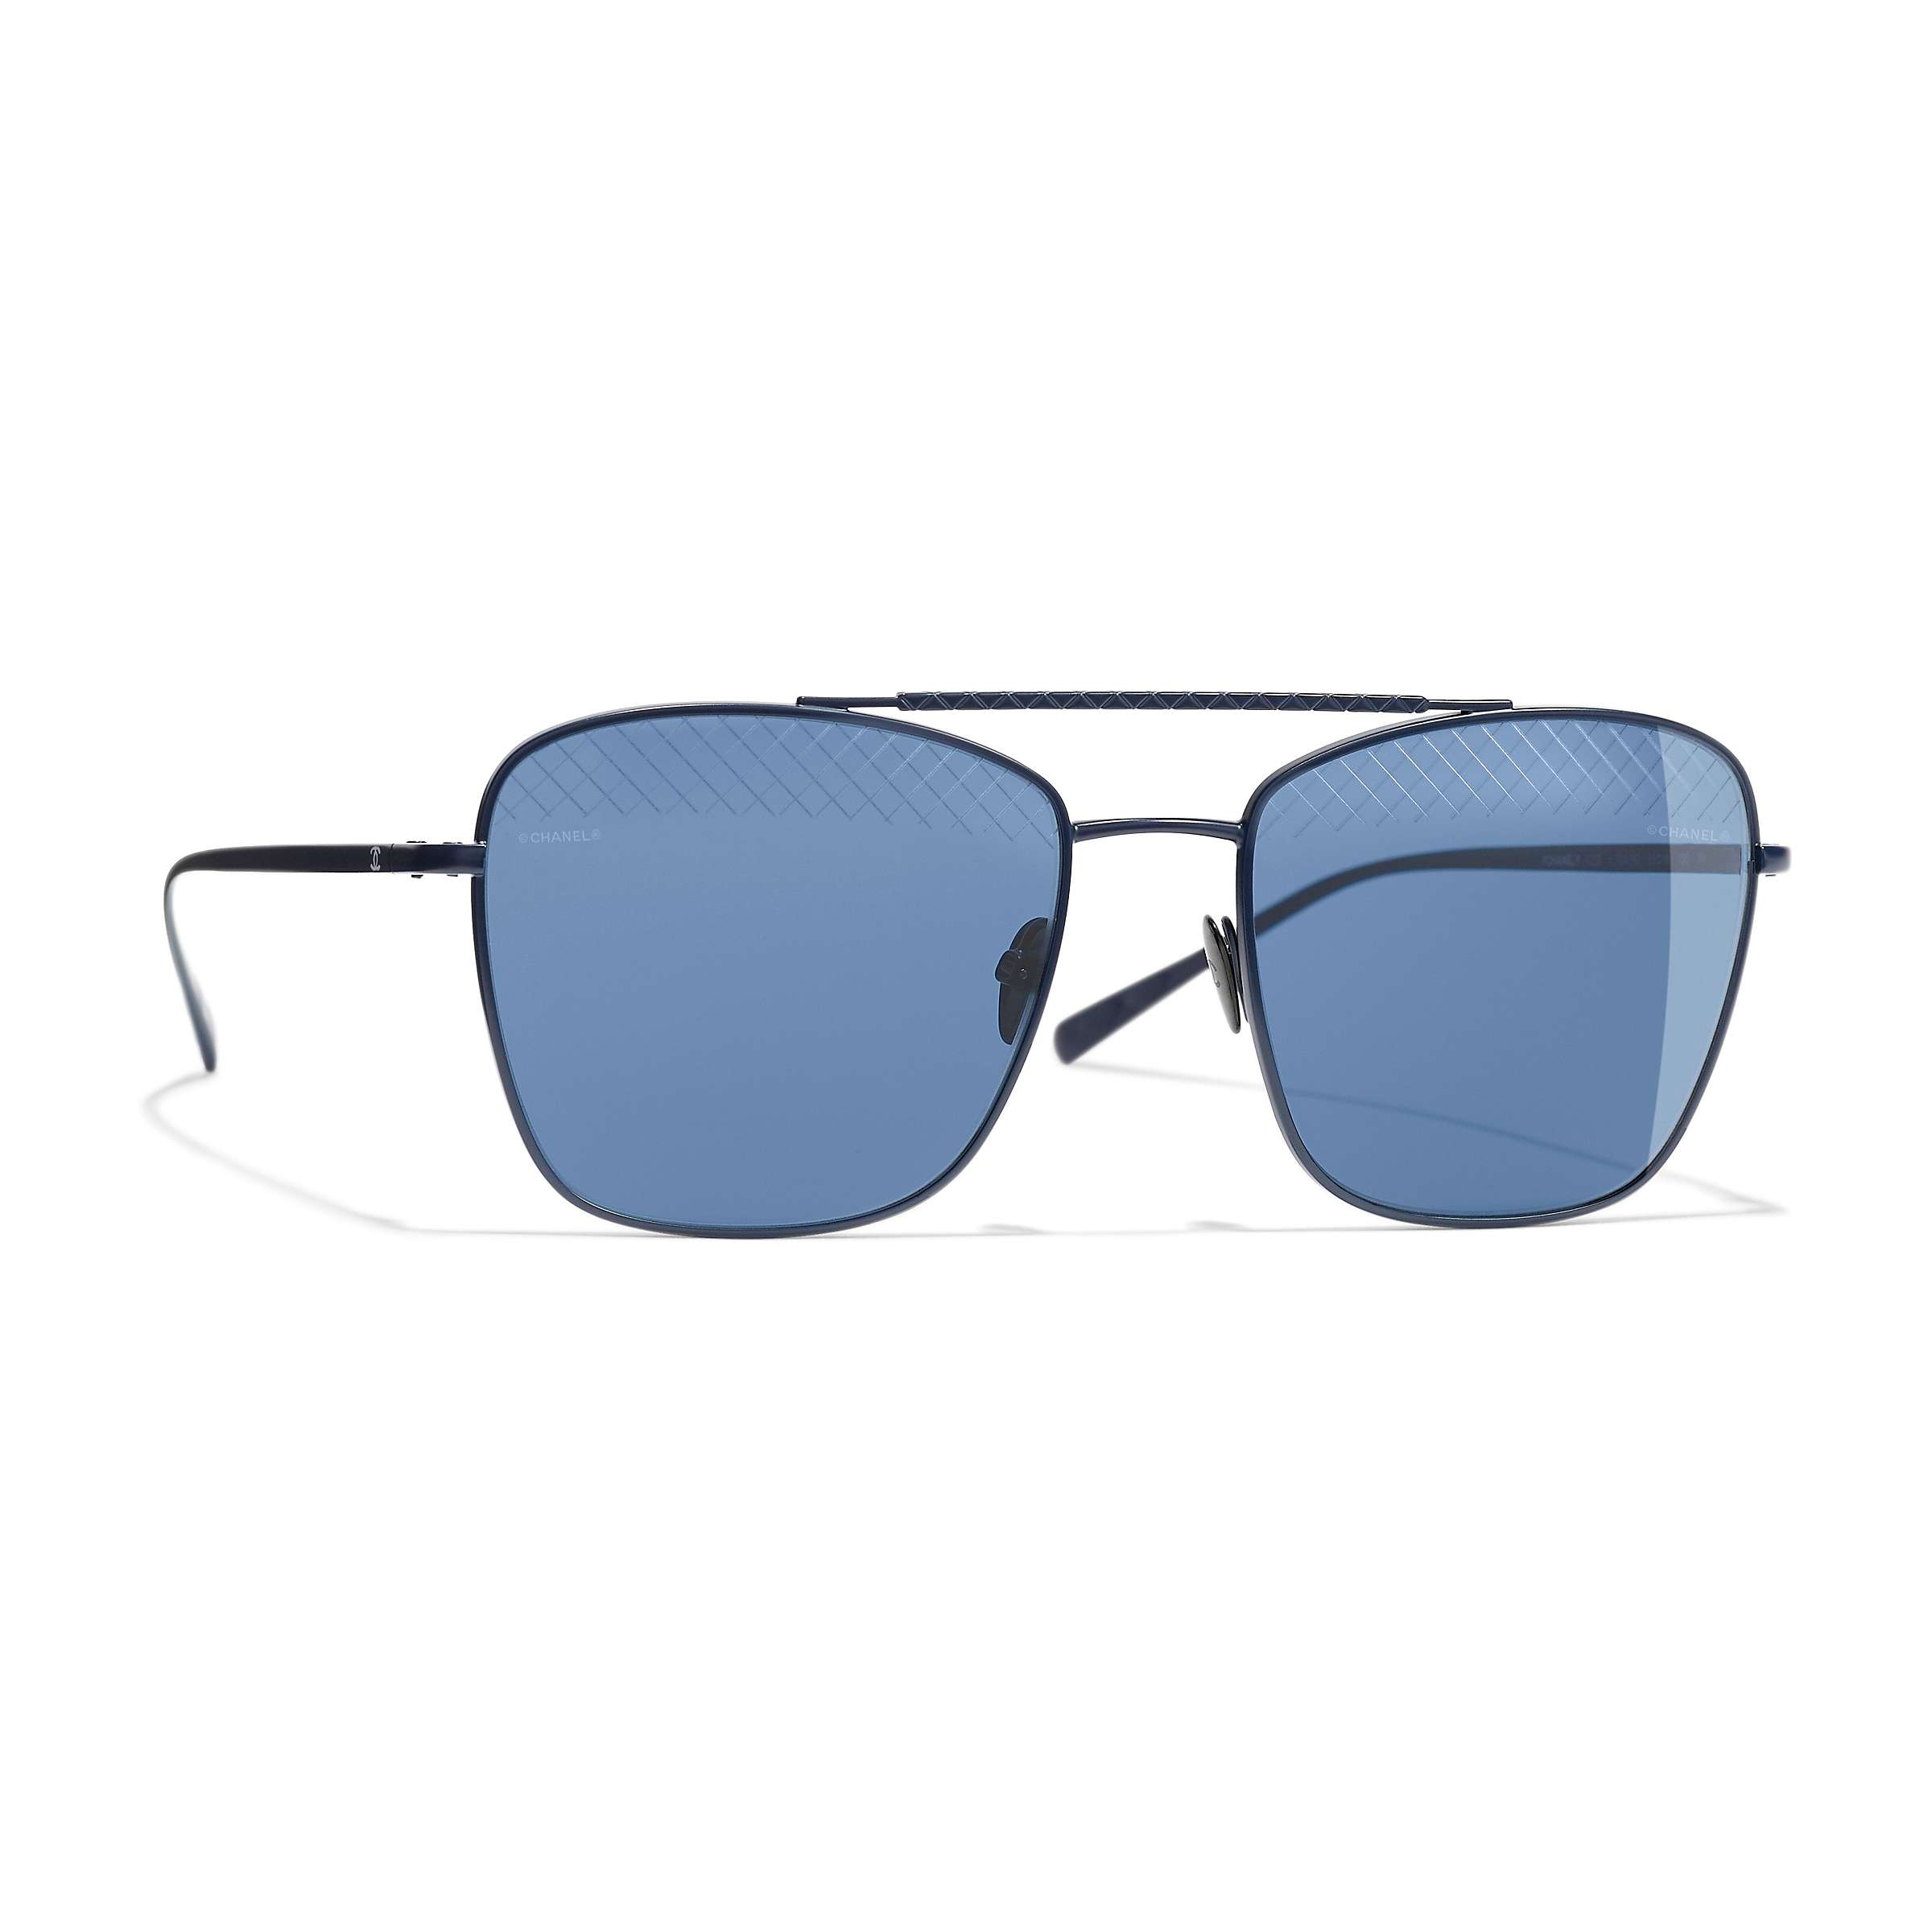 Buy CHANEL Pilot Sunglasses CH4256 Black/Blue Online at johnlewis.com